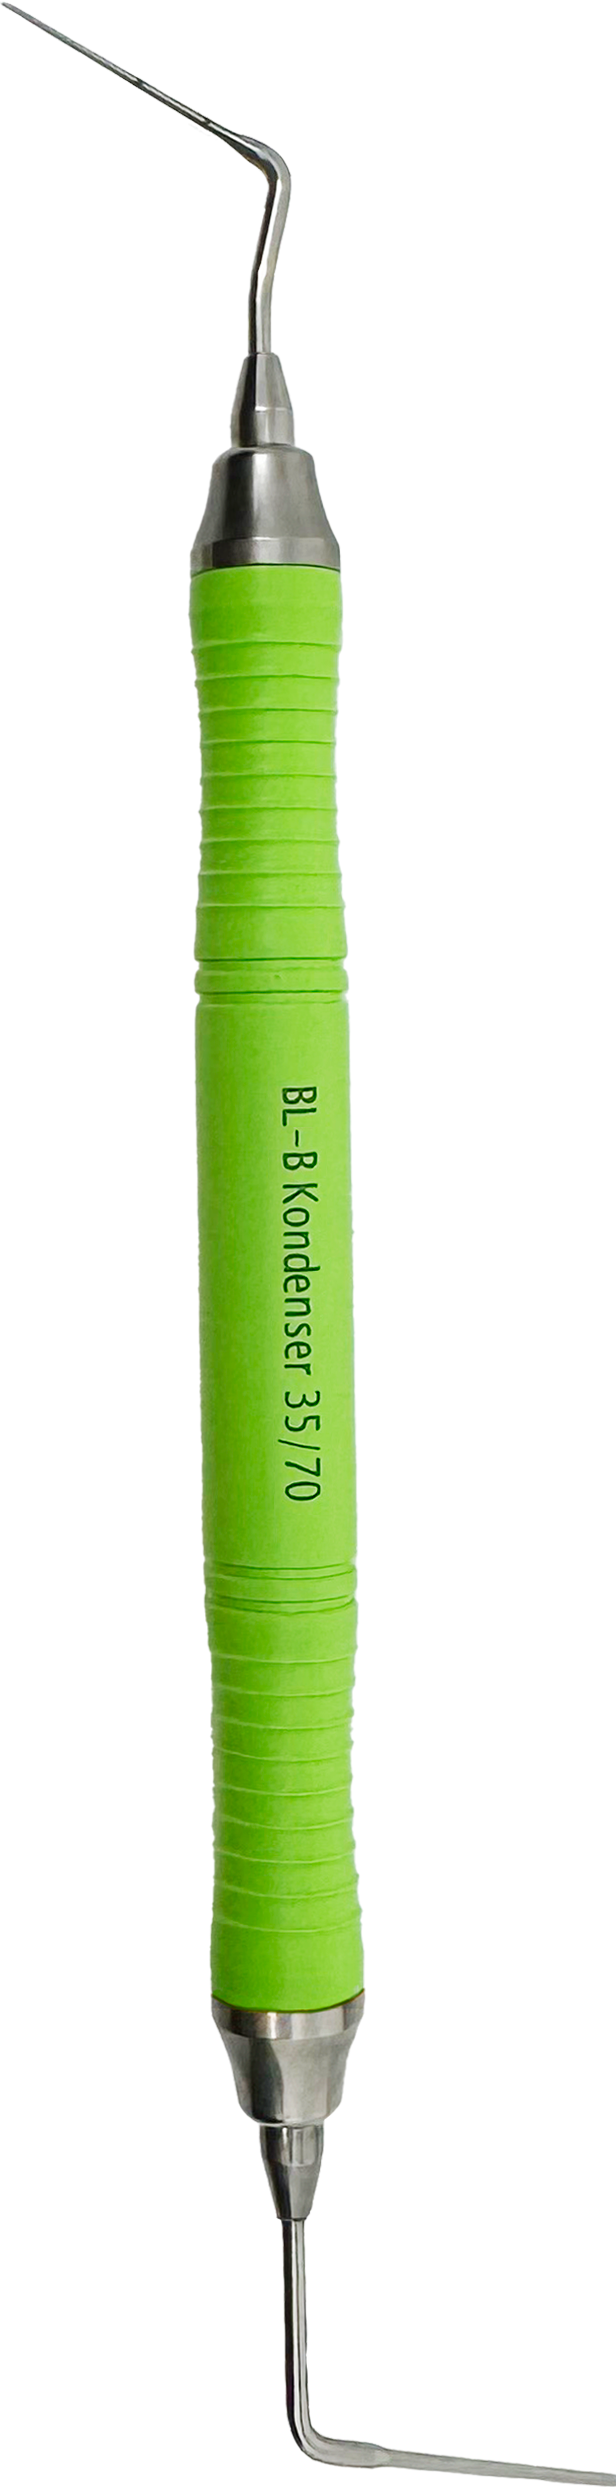 BL-B Kondenser 35/70 (Retail)